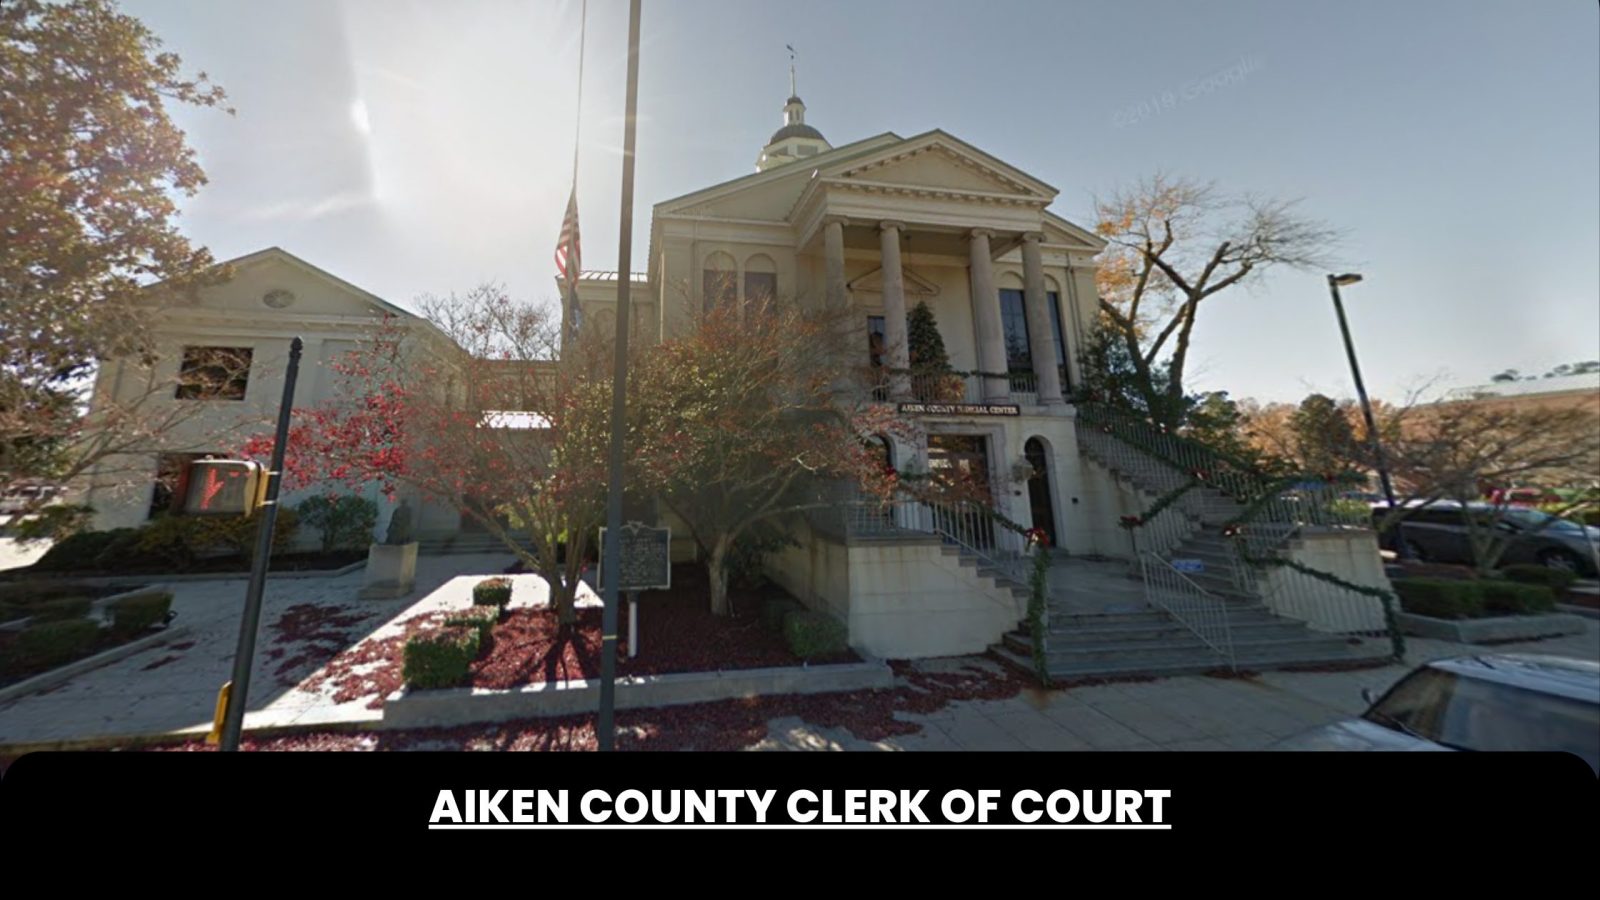 Aiken County Clerk of Court 1